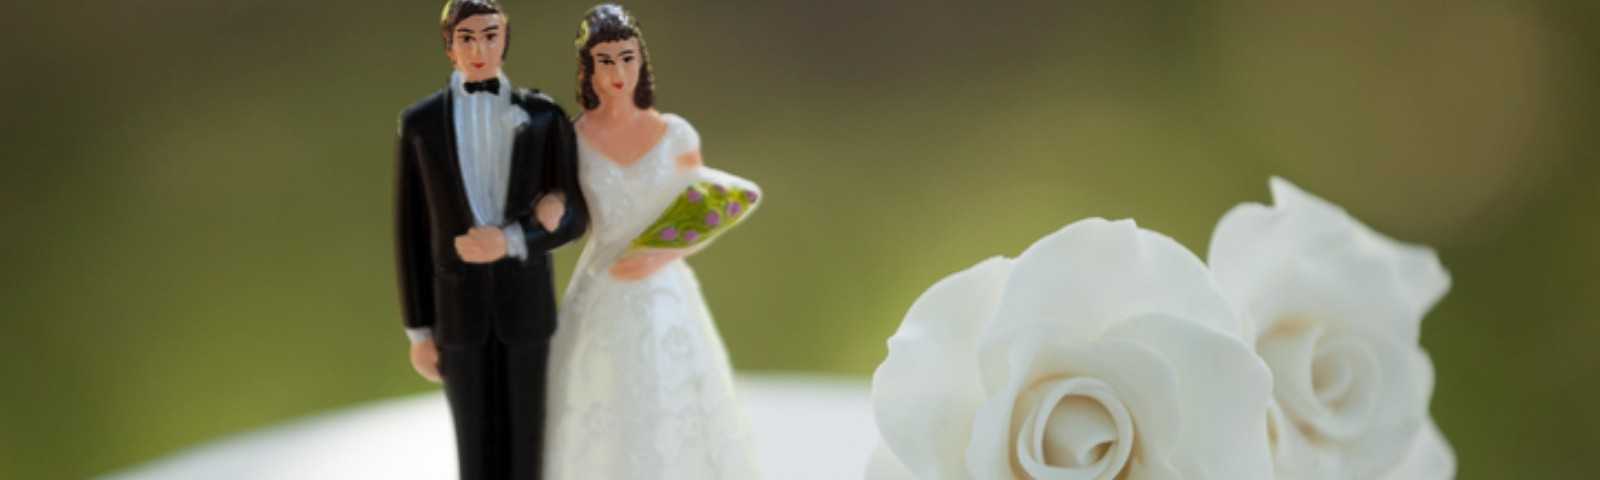 Нужны ли свидетели при регистрации брака в загсе 2021